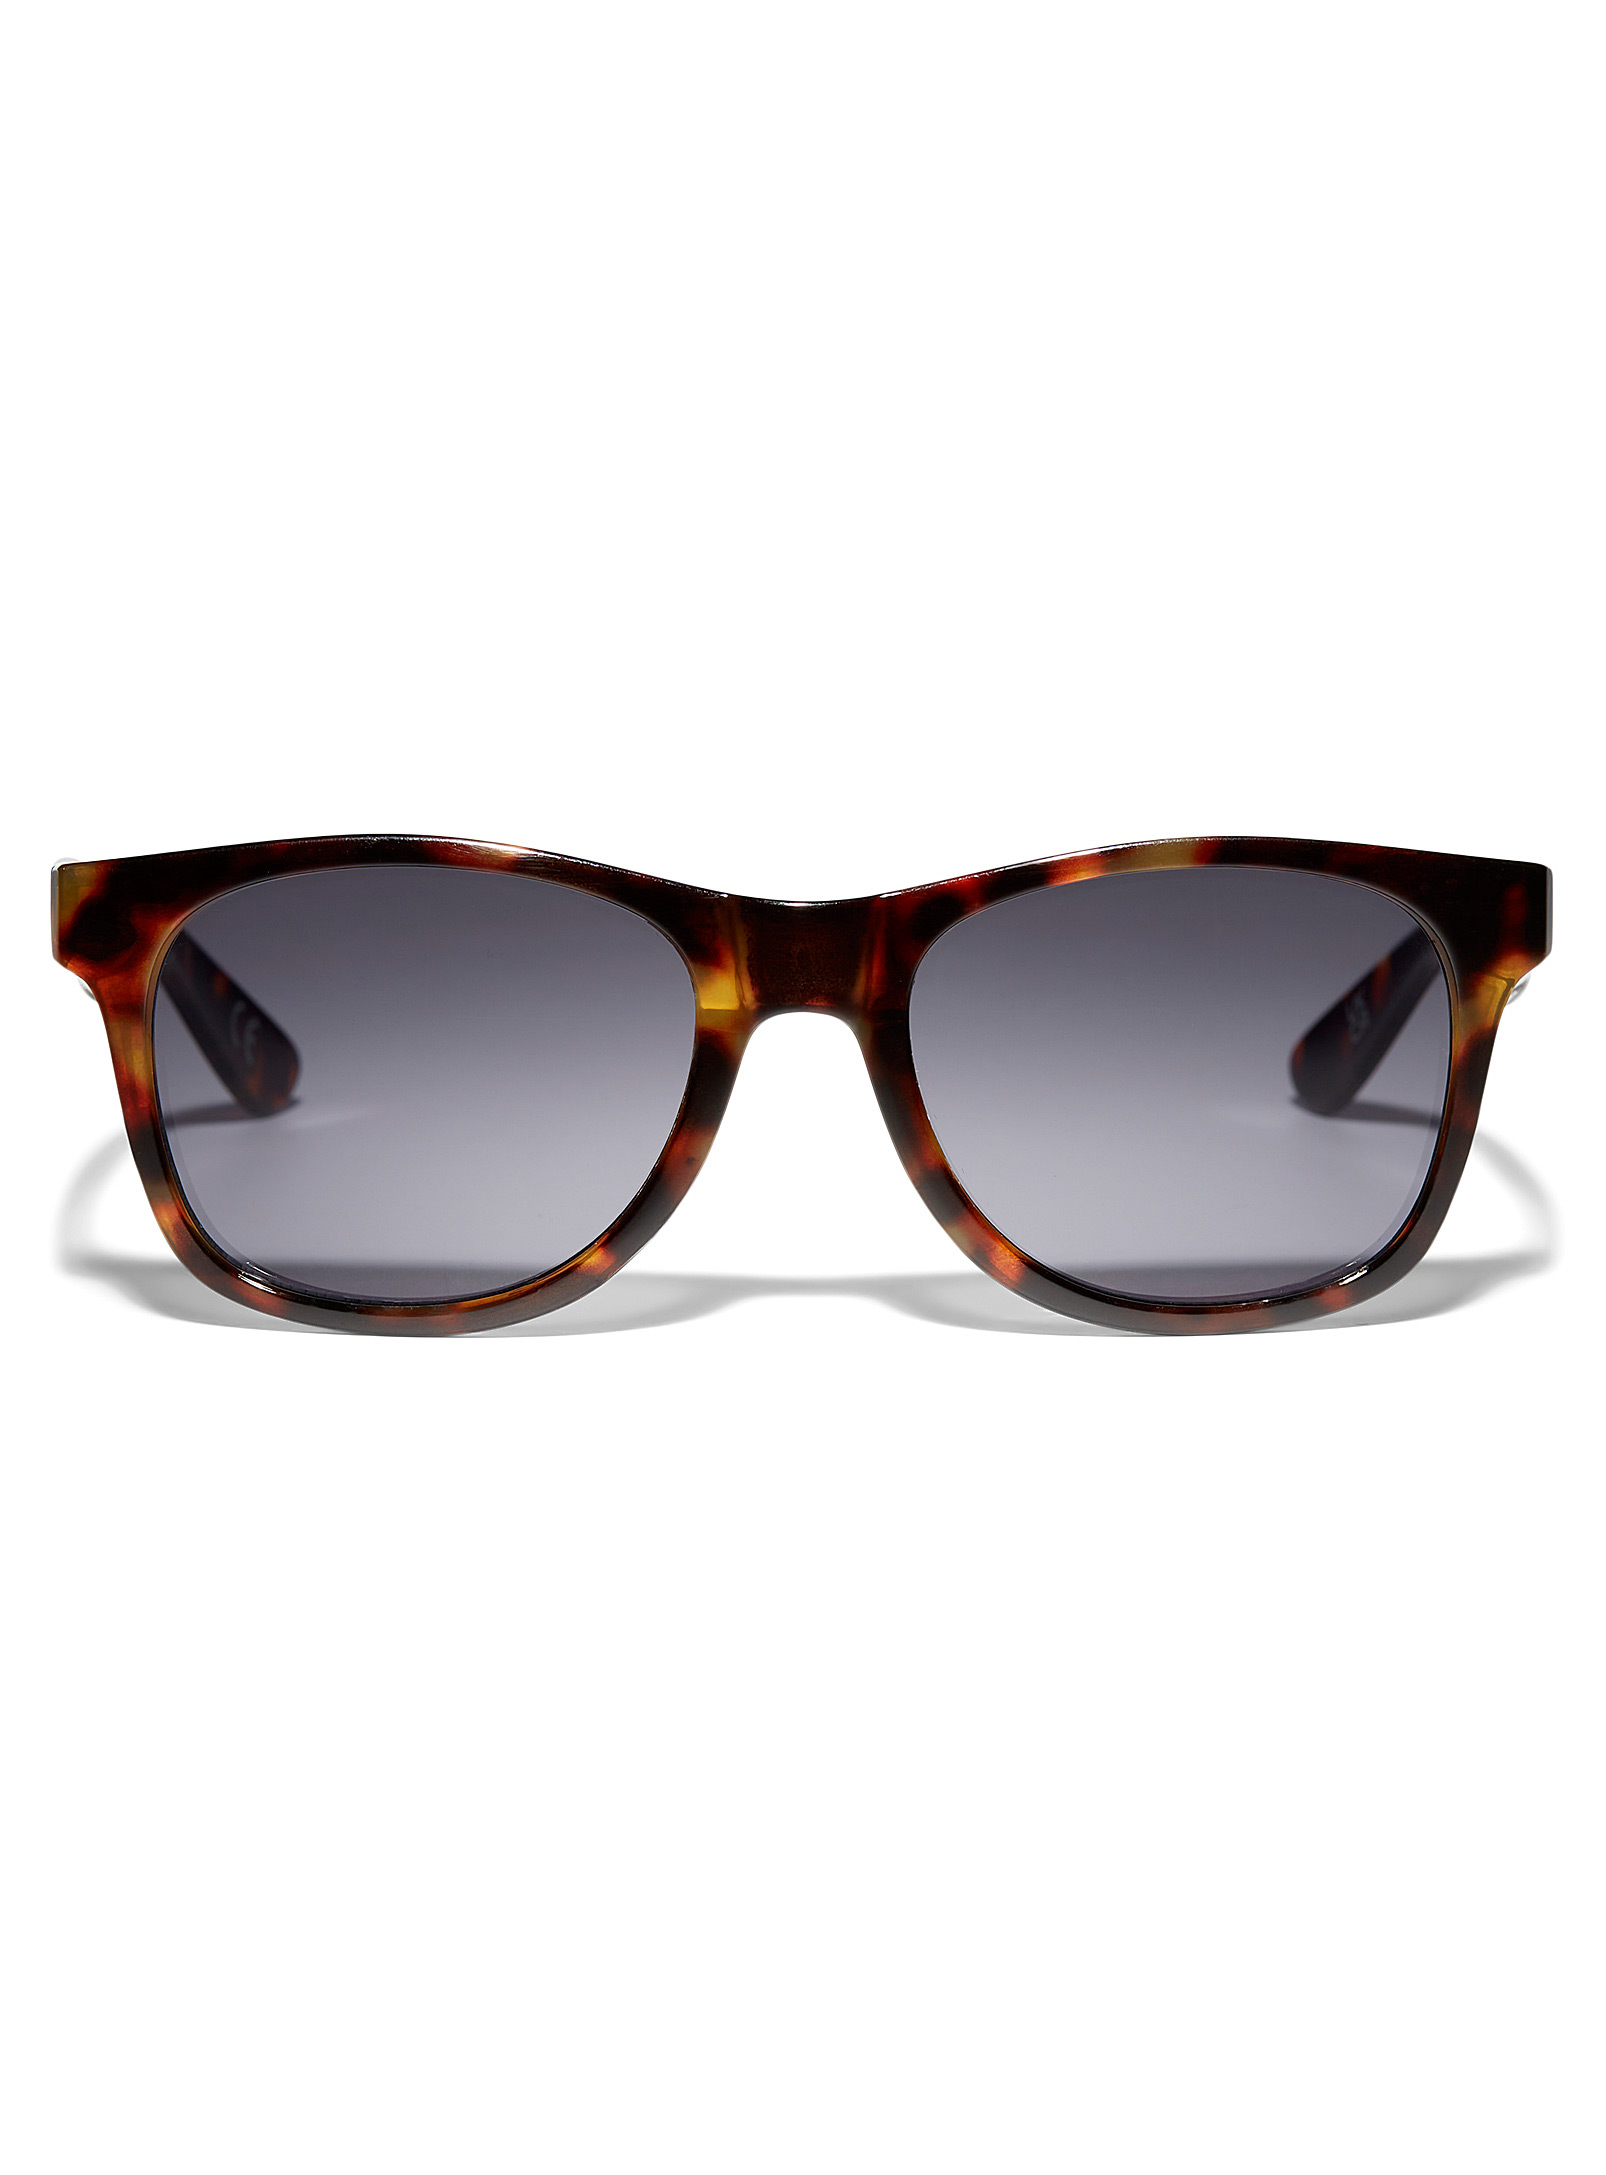 Vans Spicoli Sunglasses In Patterned Brown